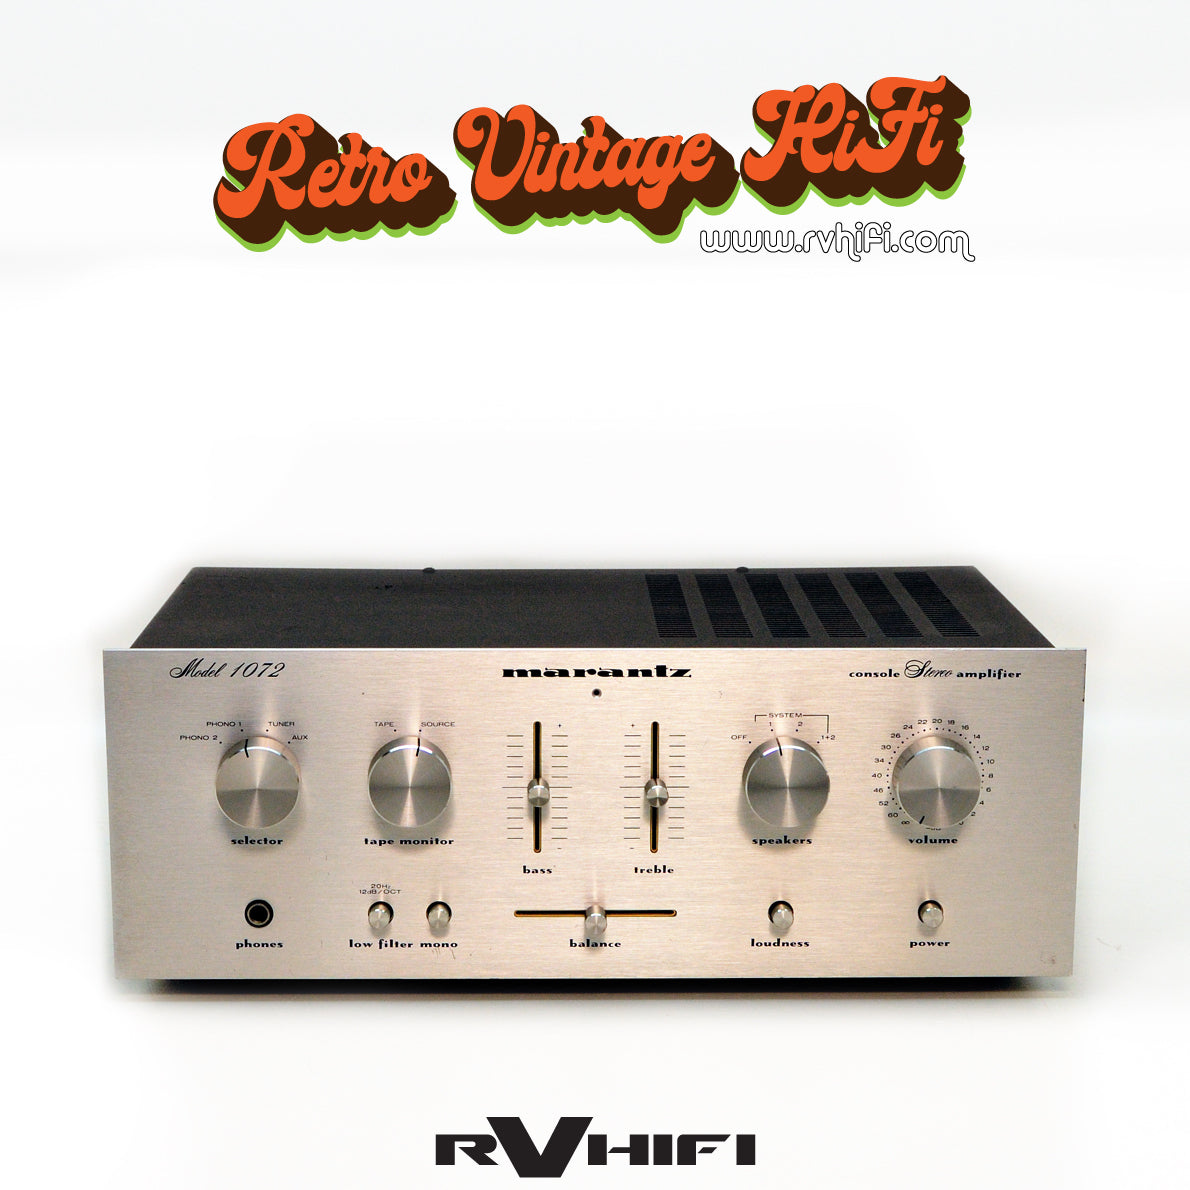 Marantz 1072 Stereophonic Amplifier